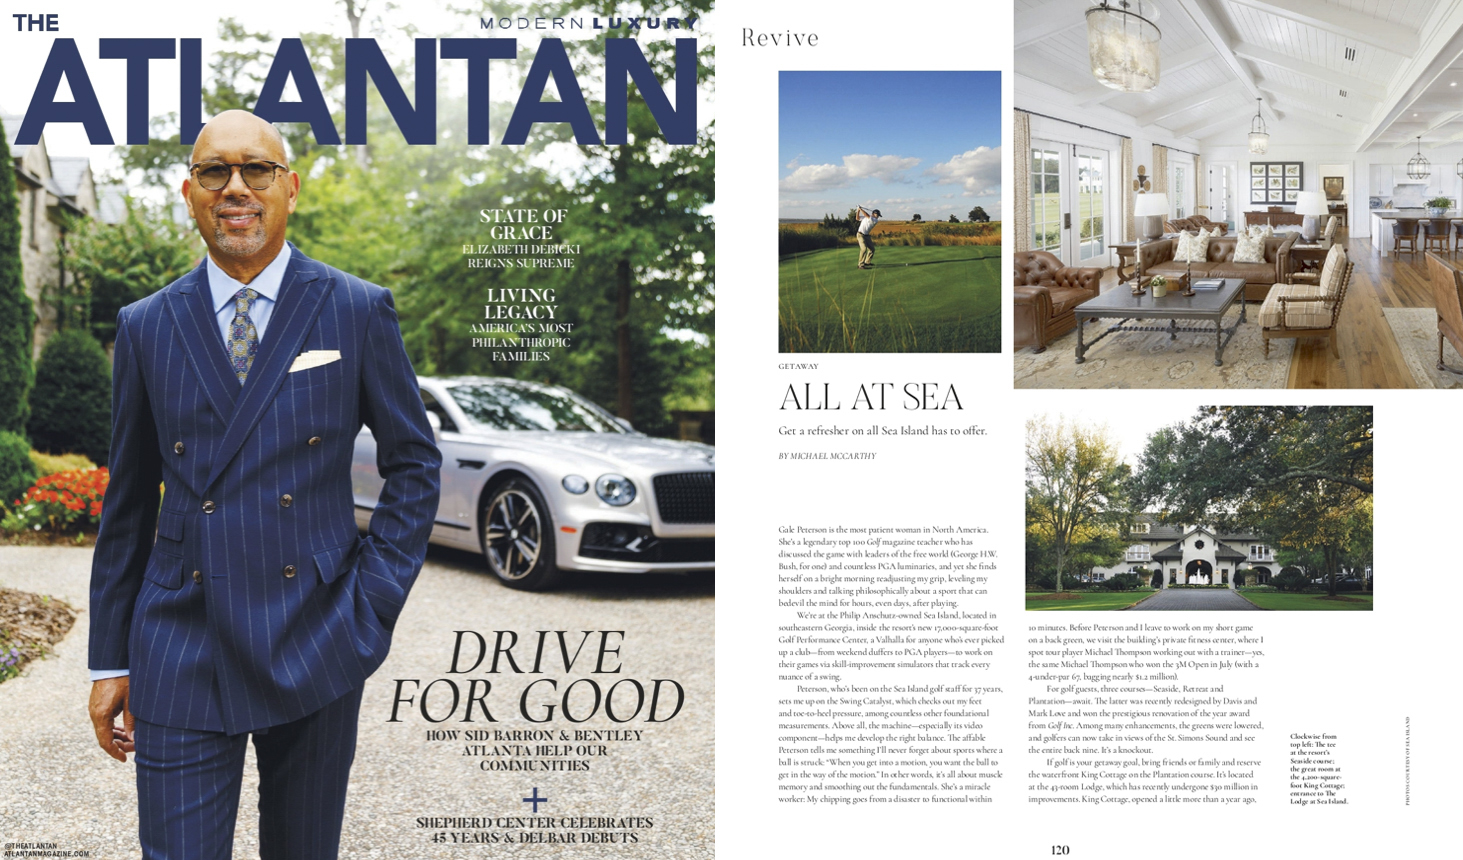 Photos featured in The Atlantan Modern Luxury